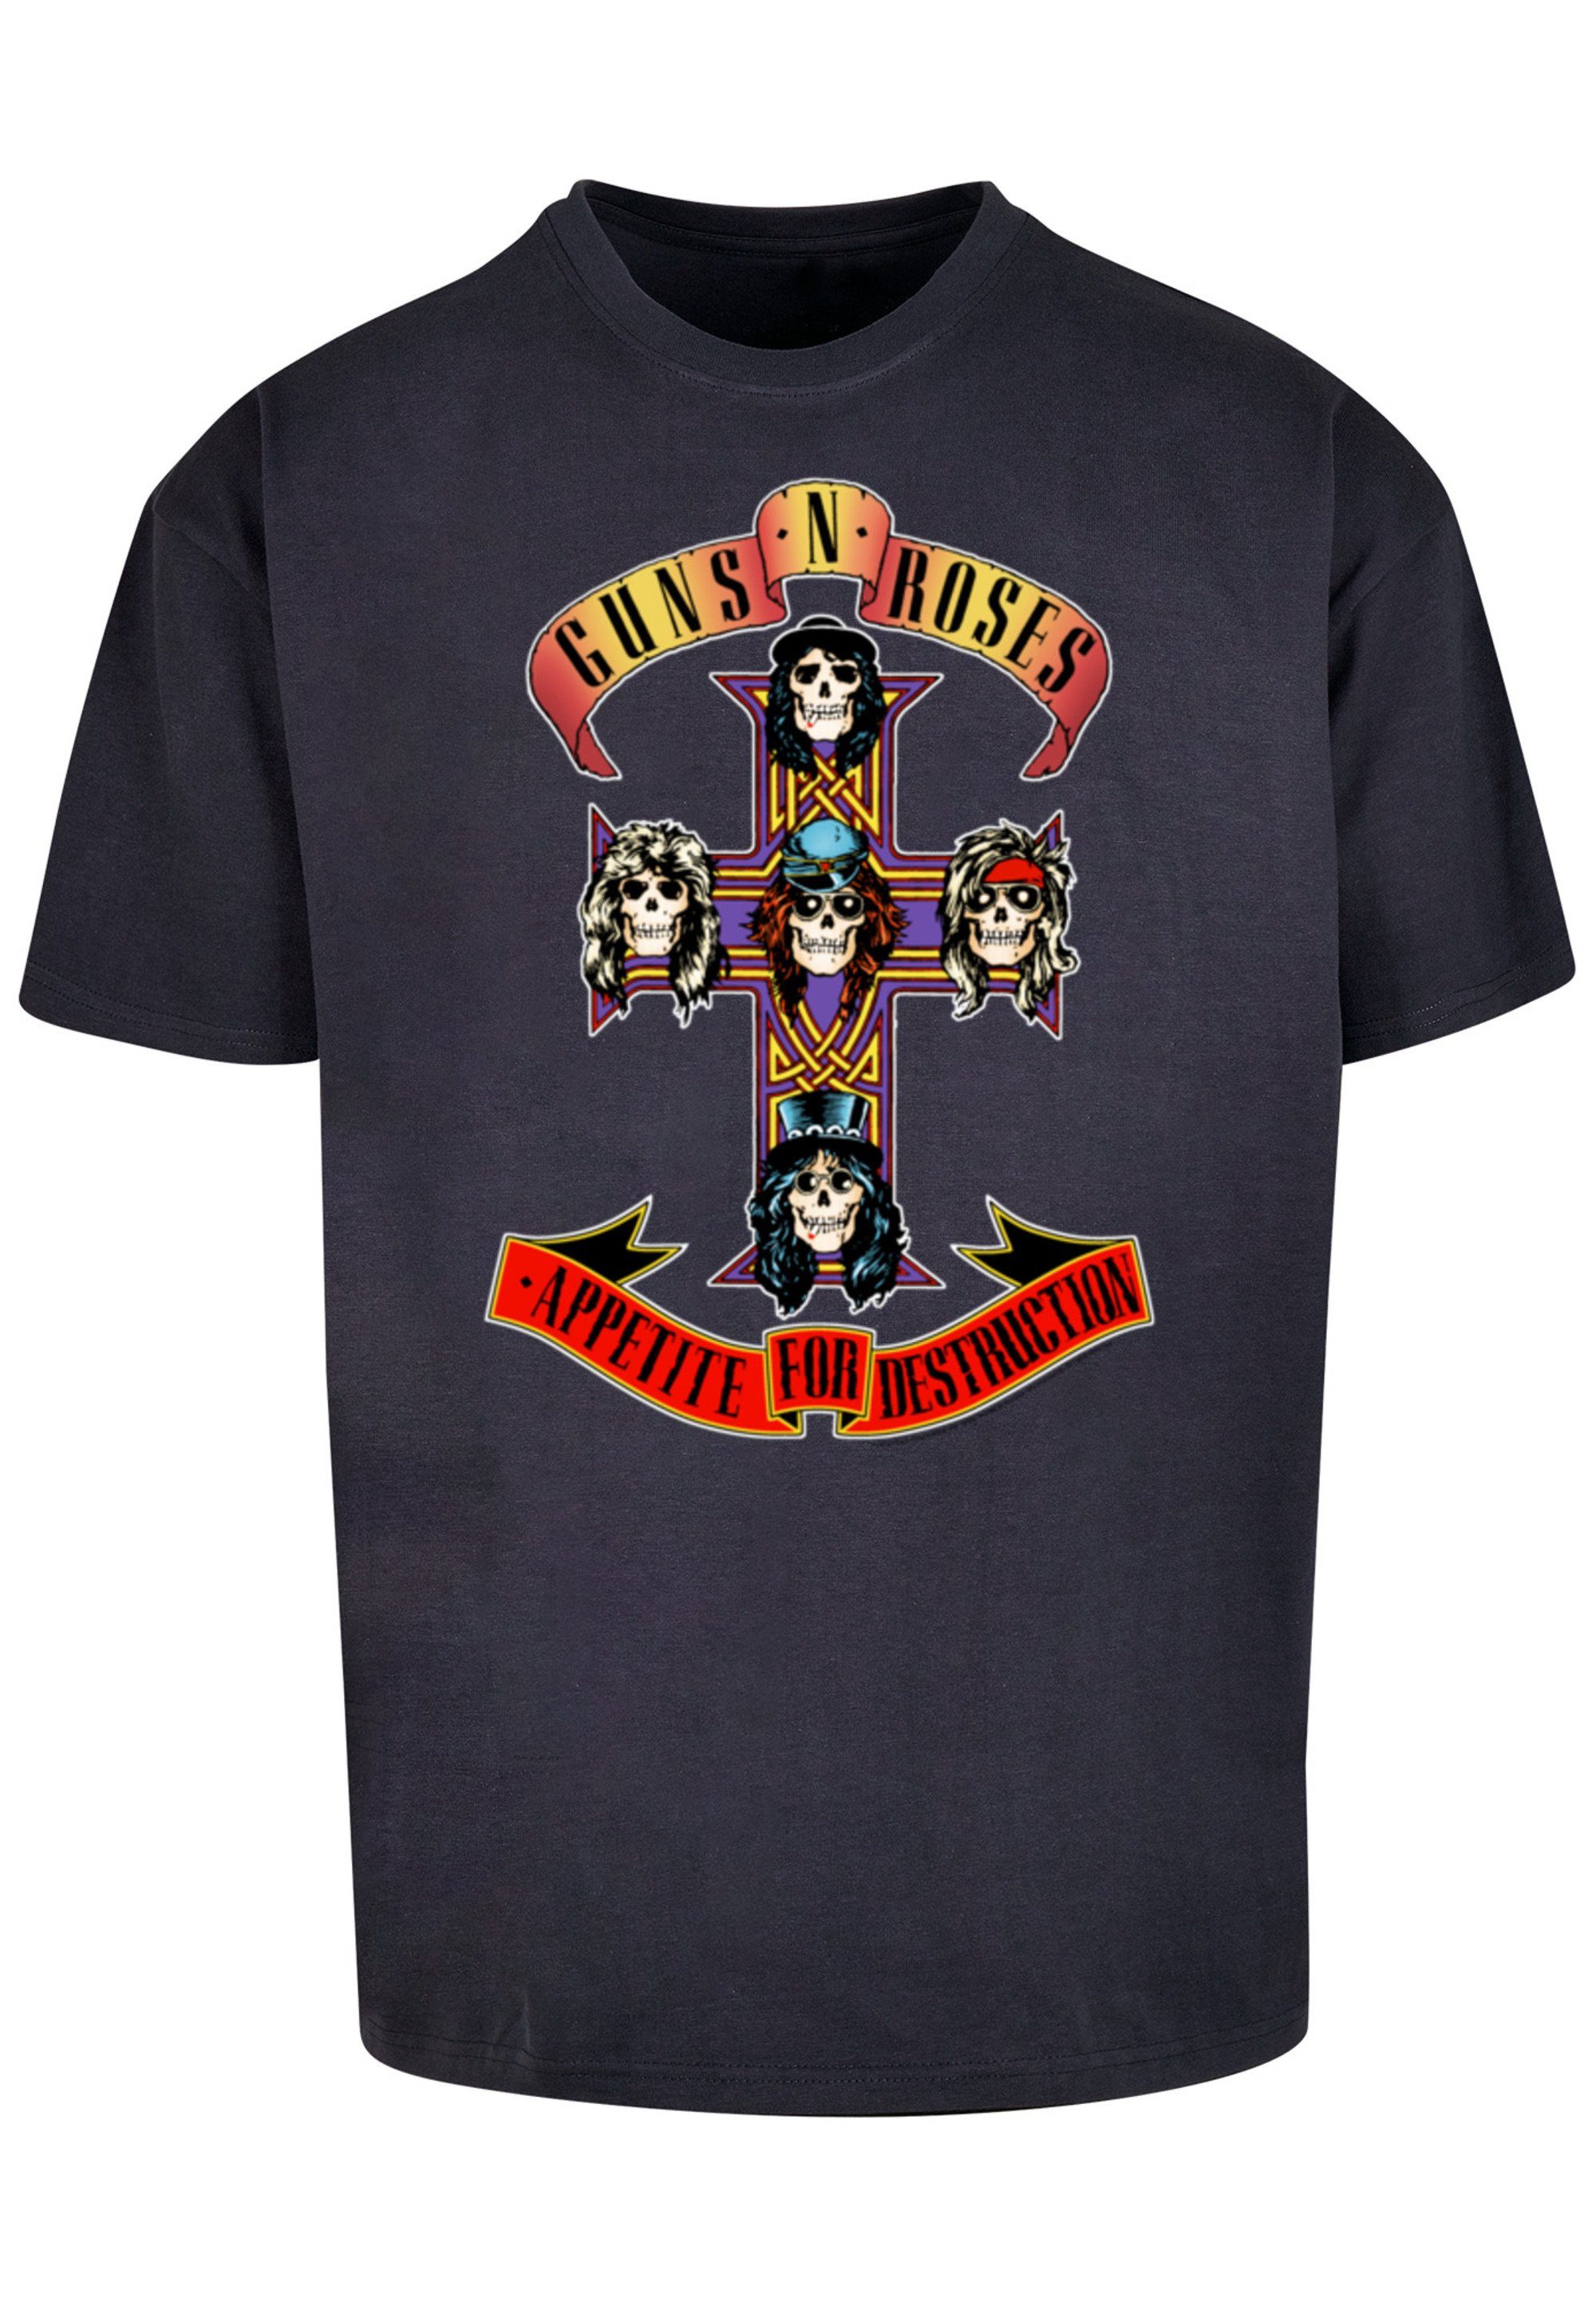 F4NT4STIC T-Shirt Guns 'n' Print Band For navy Roses Appetite Destruction